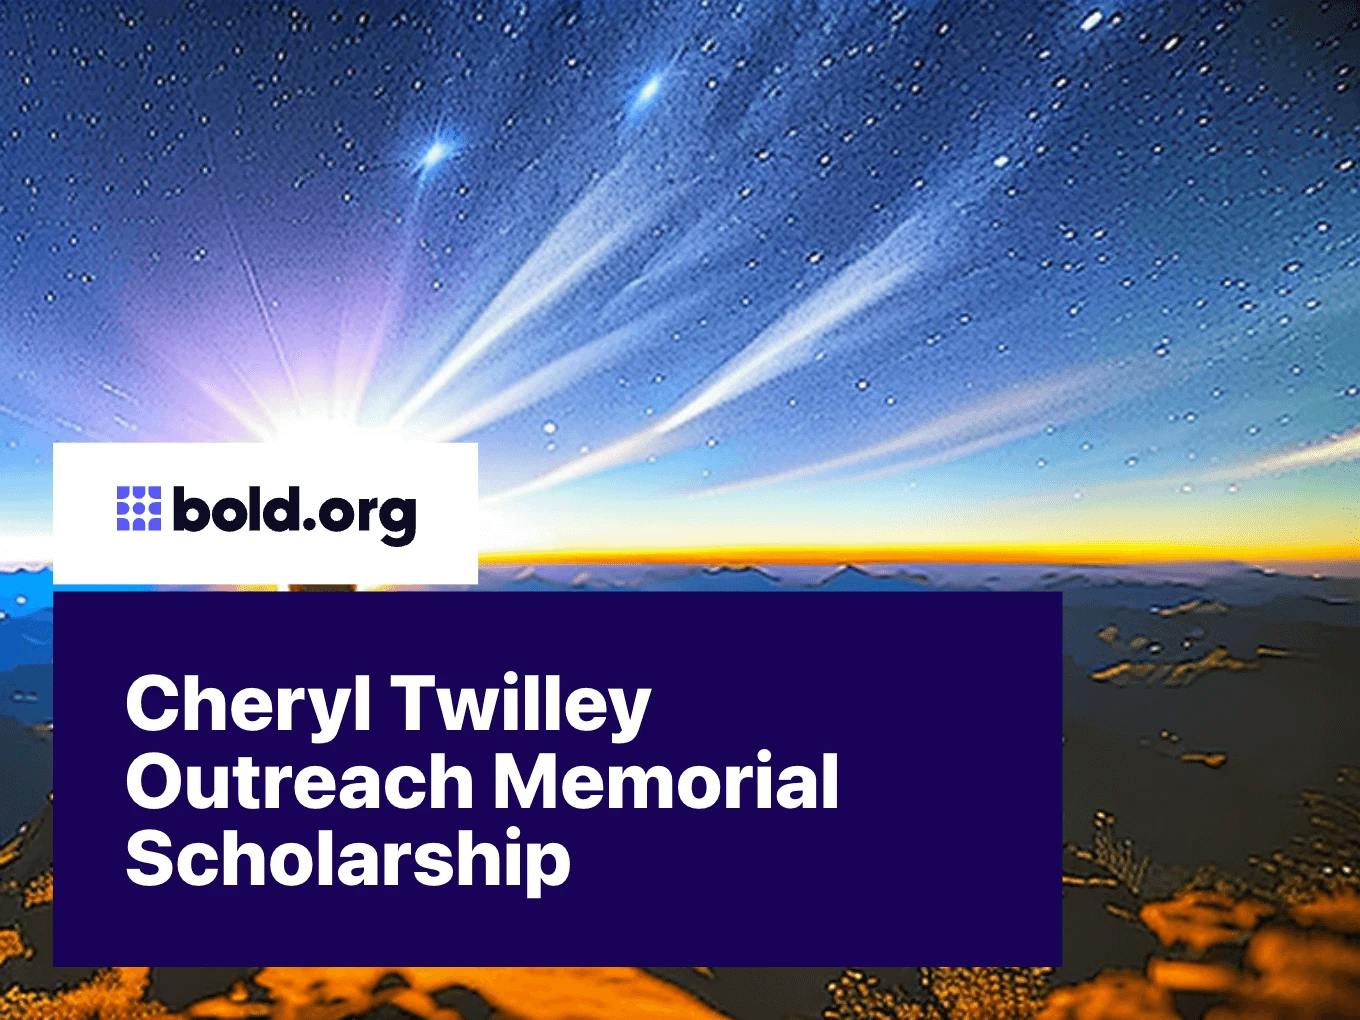 Cheryl Twilley Outreach Memorial Scholarship